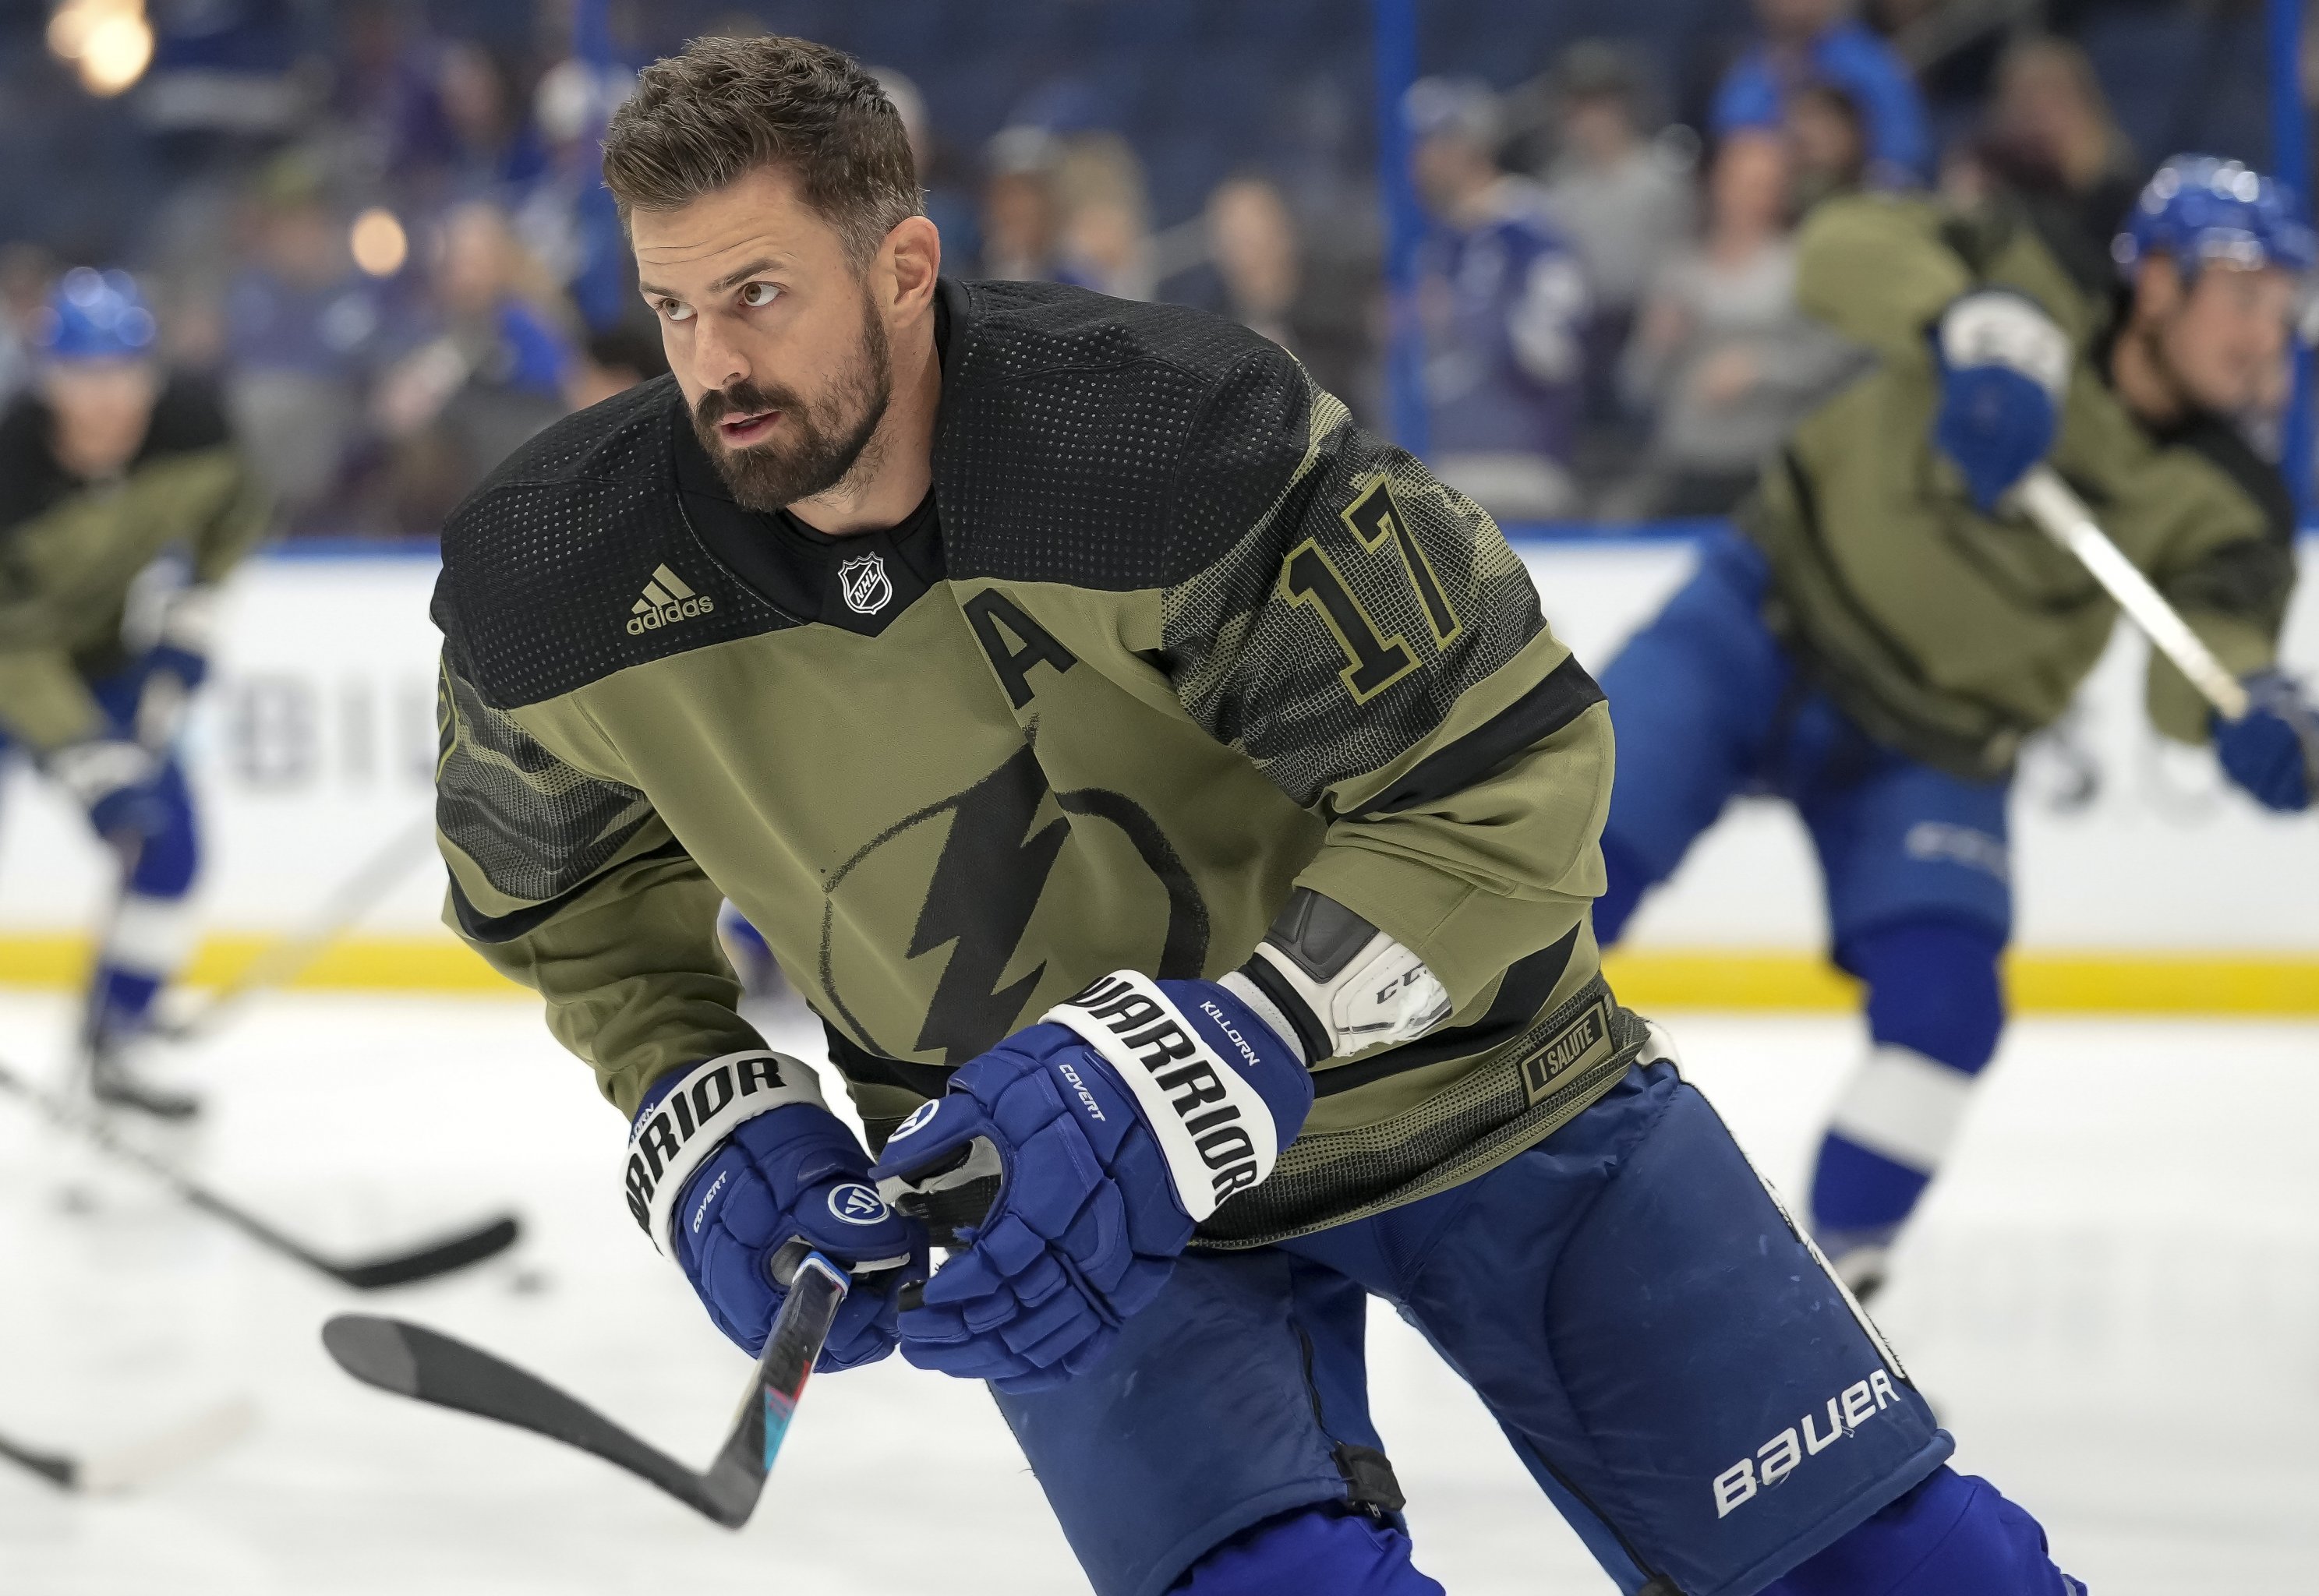 NHL - Adidas reinvents Original Six jerseys in EA Sports' 'NHL 19' - ESPN